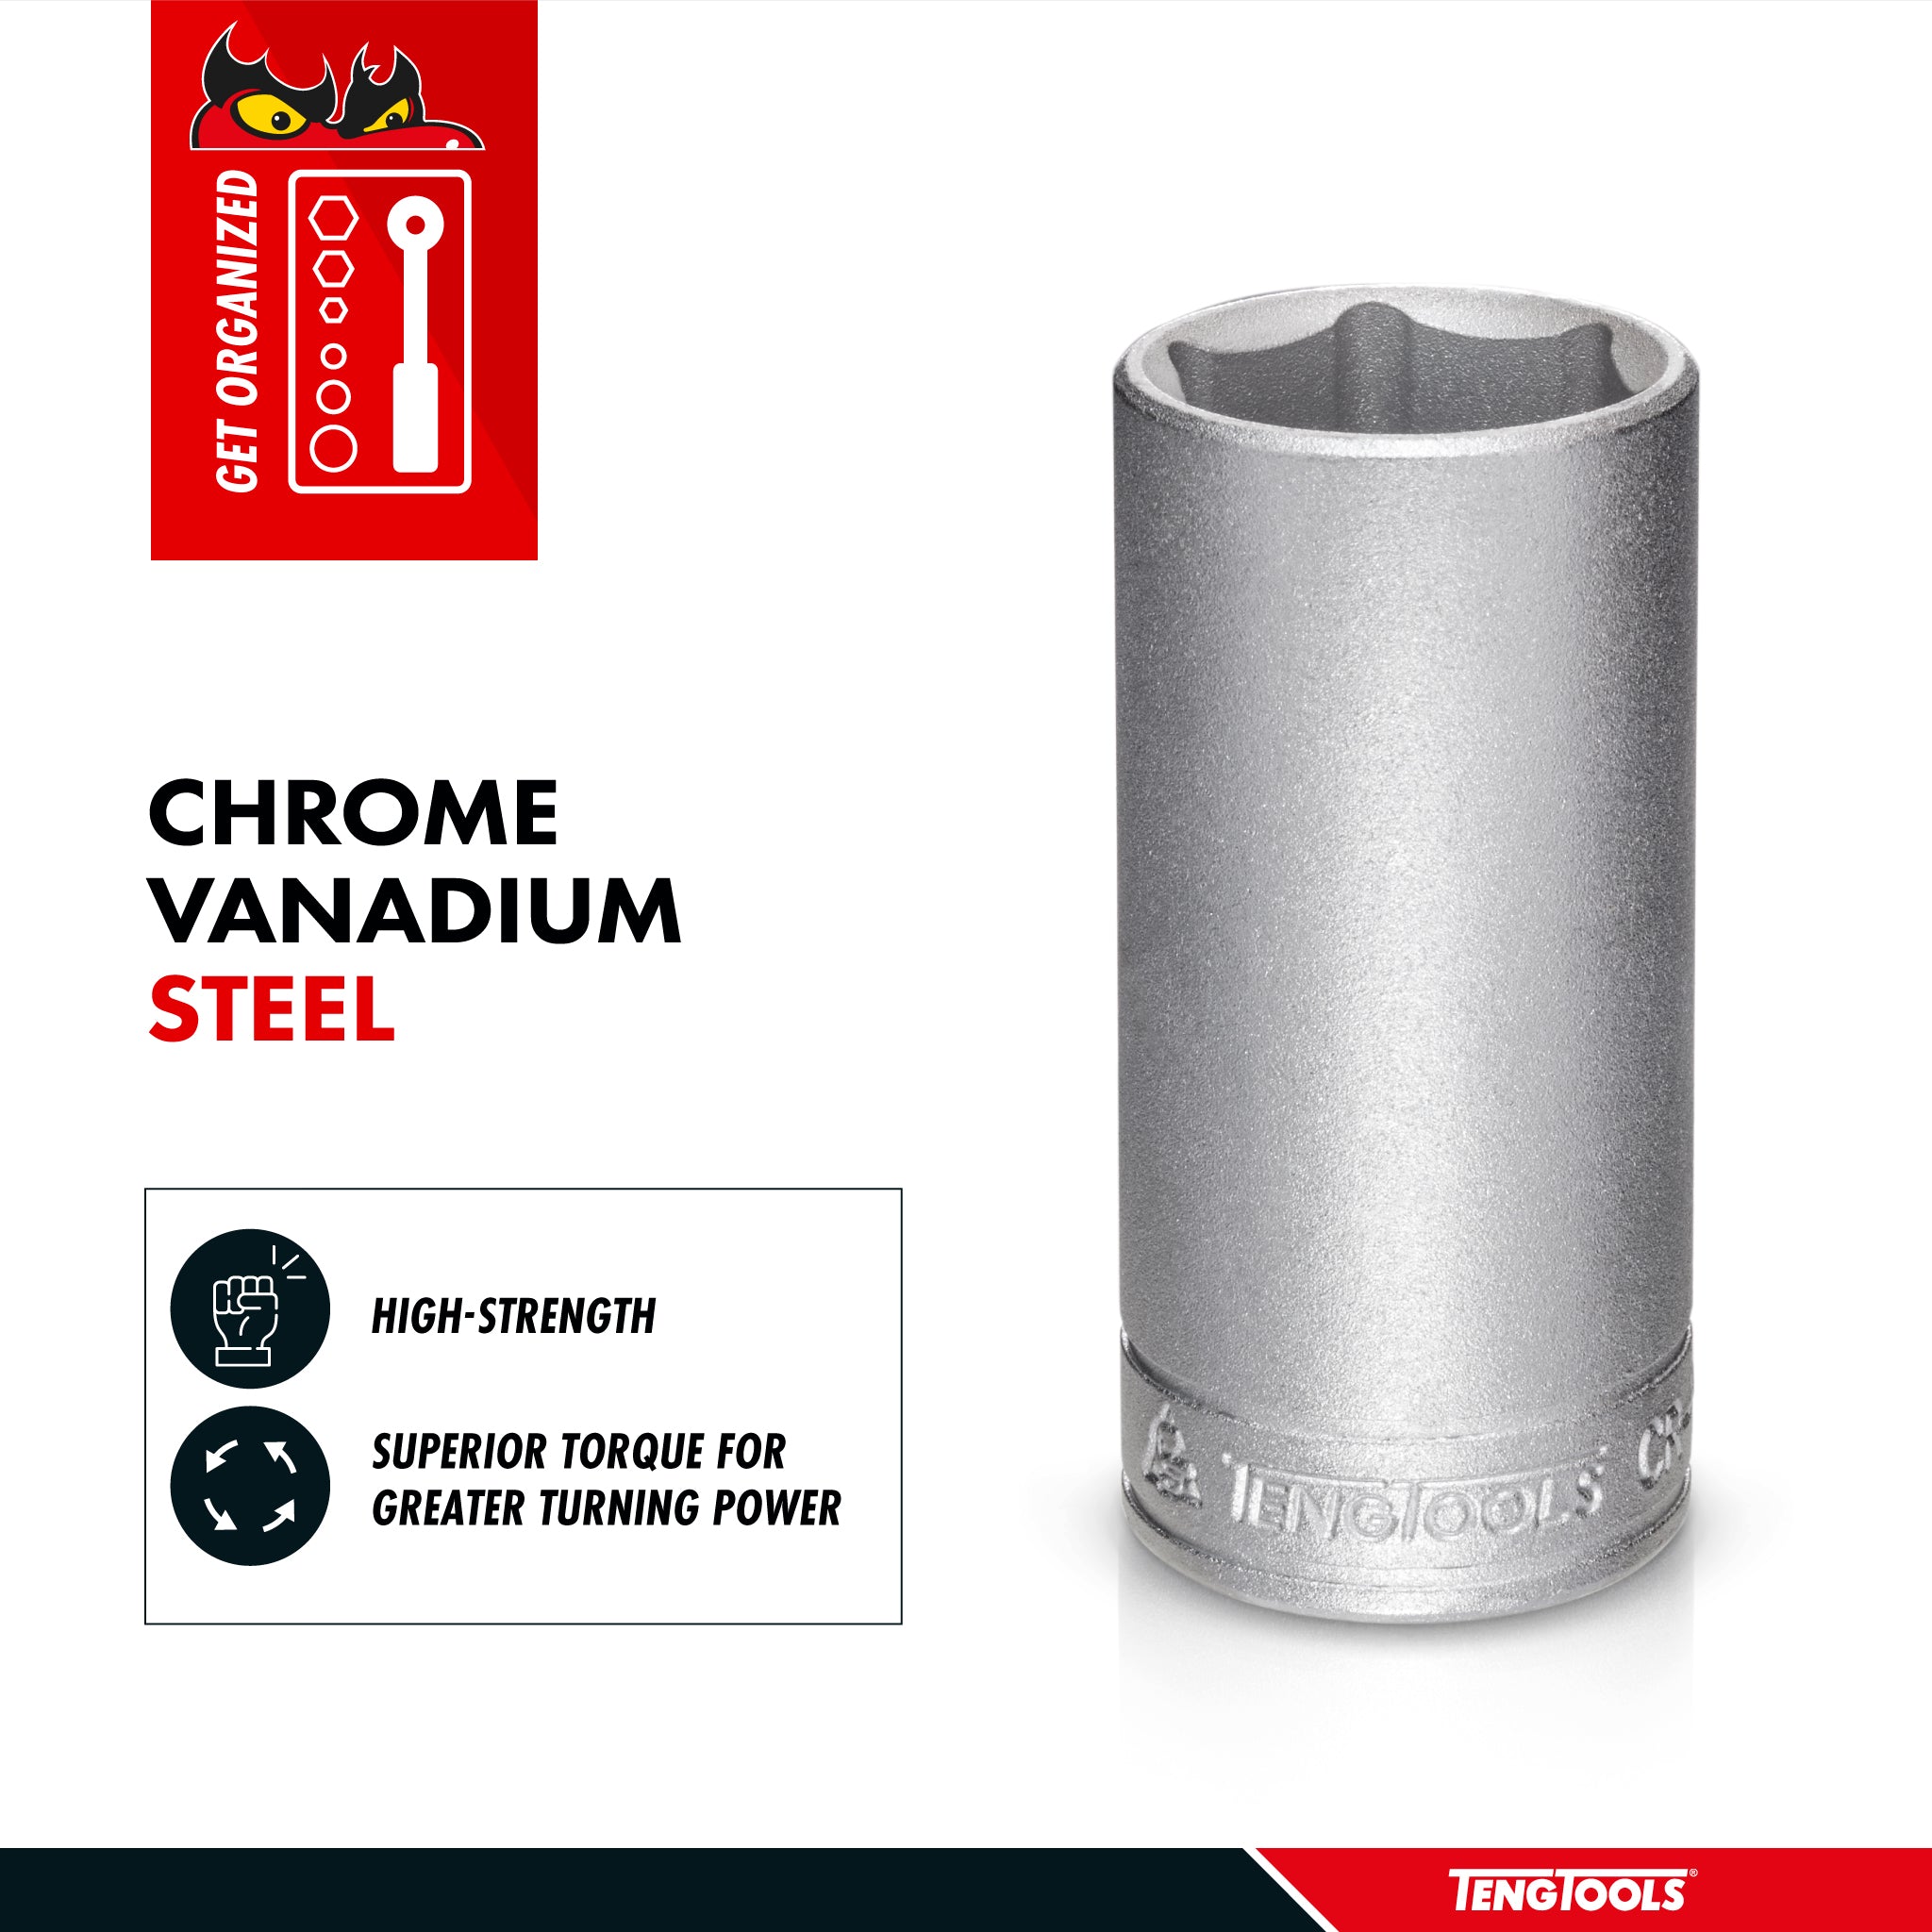 Teng Tools 3/8 Inch Drive 6 Point Metric Deep Chrome Vanadium Sockets - 7mm